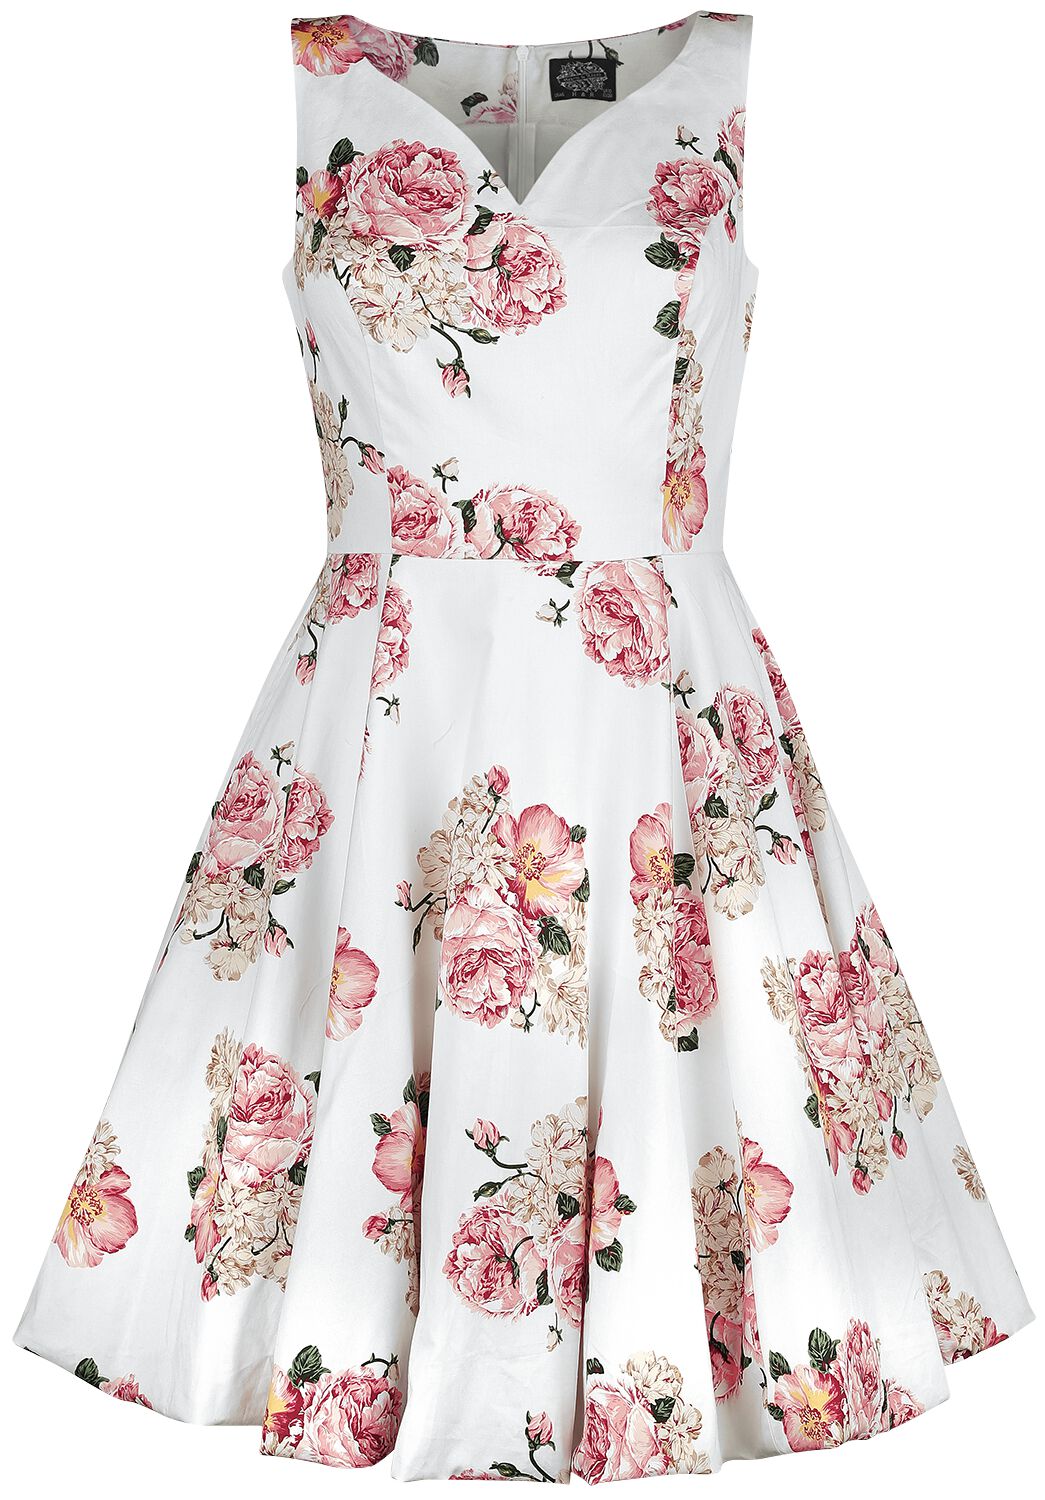 H&R London - Rockabilly Kleid knielang - Taraneh Swing Dress - XS bis 6XL - für Damen - Größe L - weiß/rosa